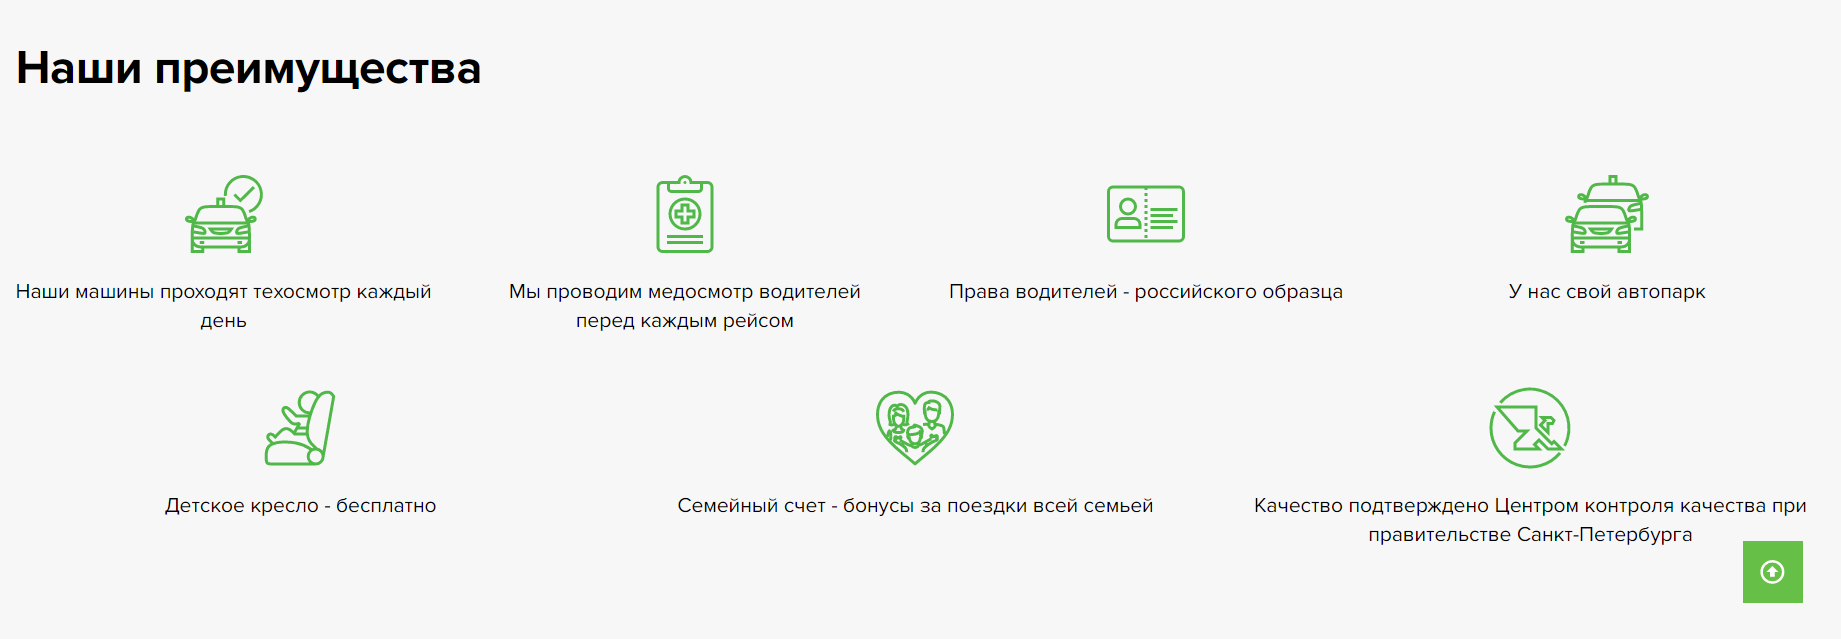 screenshot taxovichkof.ru 2020.02